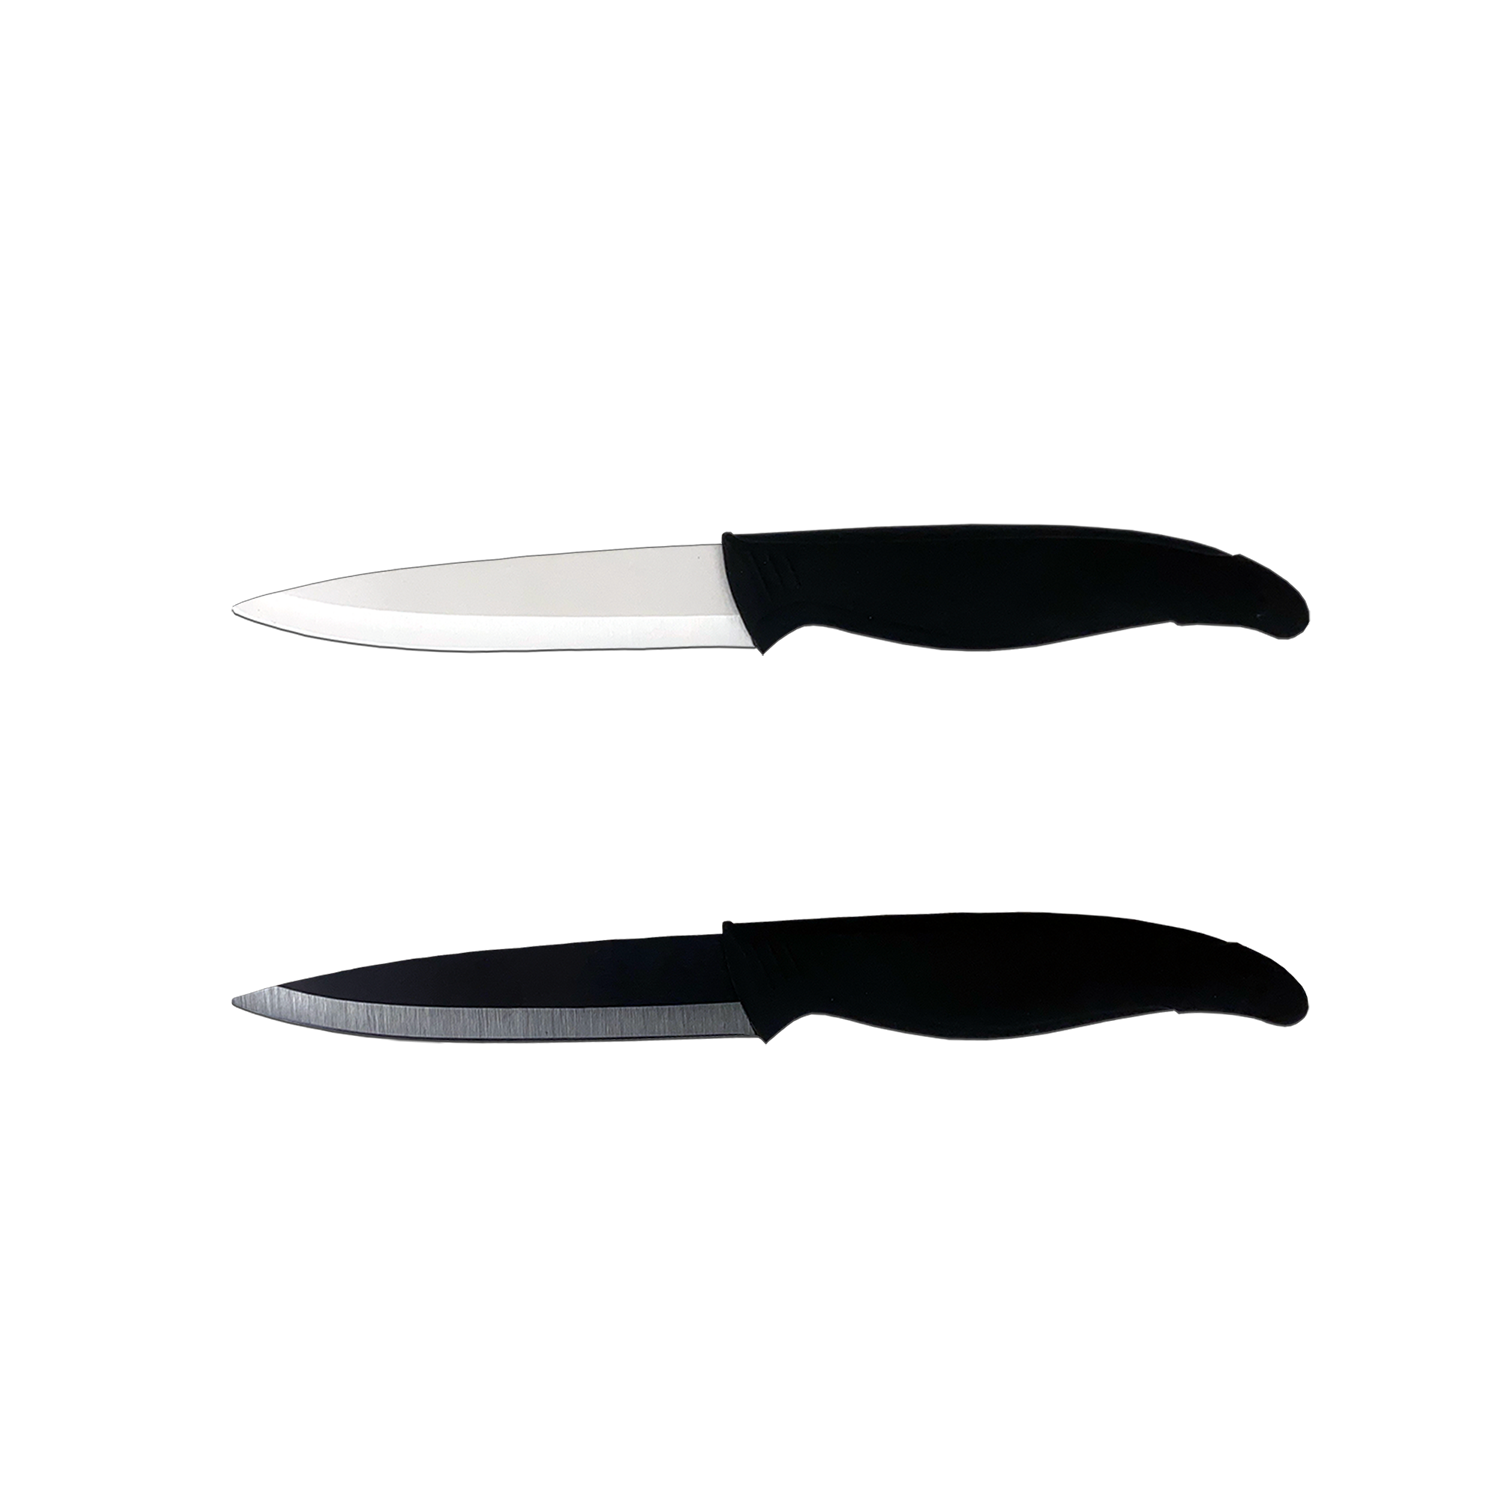 Stone River Gear Four Piece Black Ceramic Paring/Utility/Santoku/Chef's  Knife Set, Black Handles, Acrylic Holder - KnifeCenter - SRG43CKBH -  Discontinued